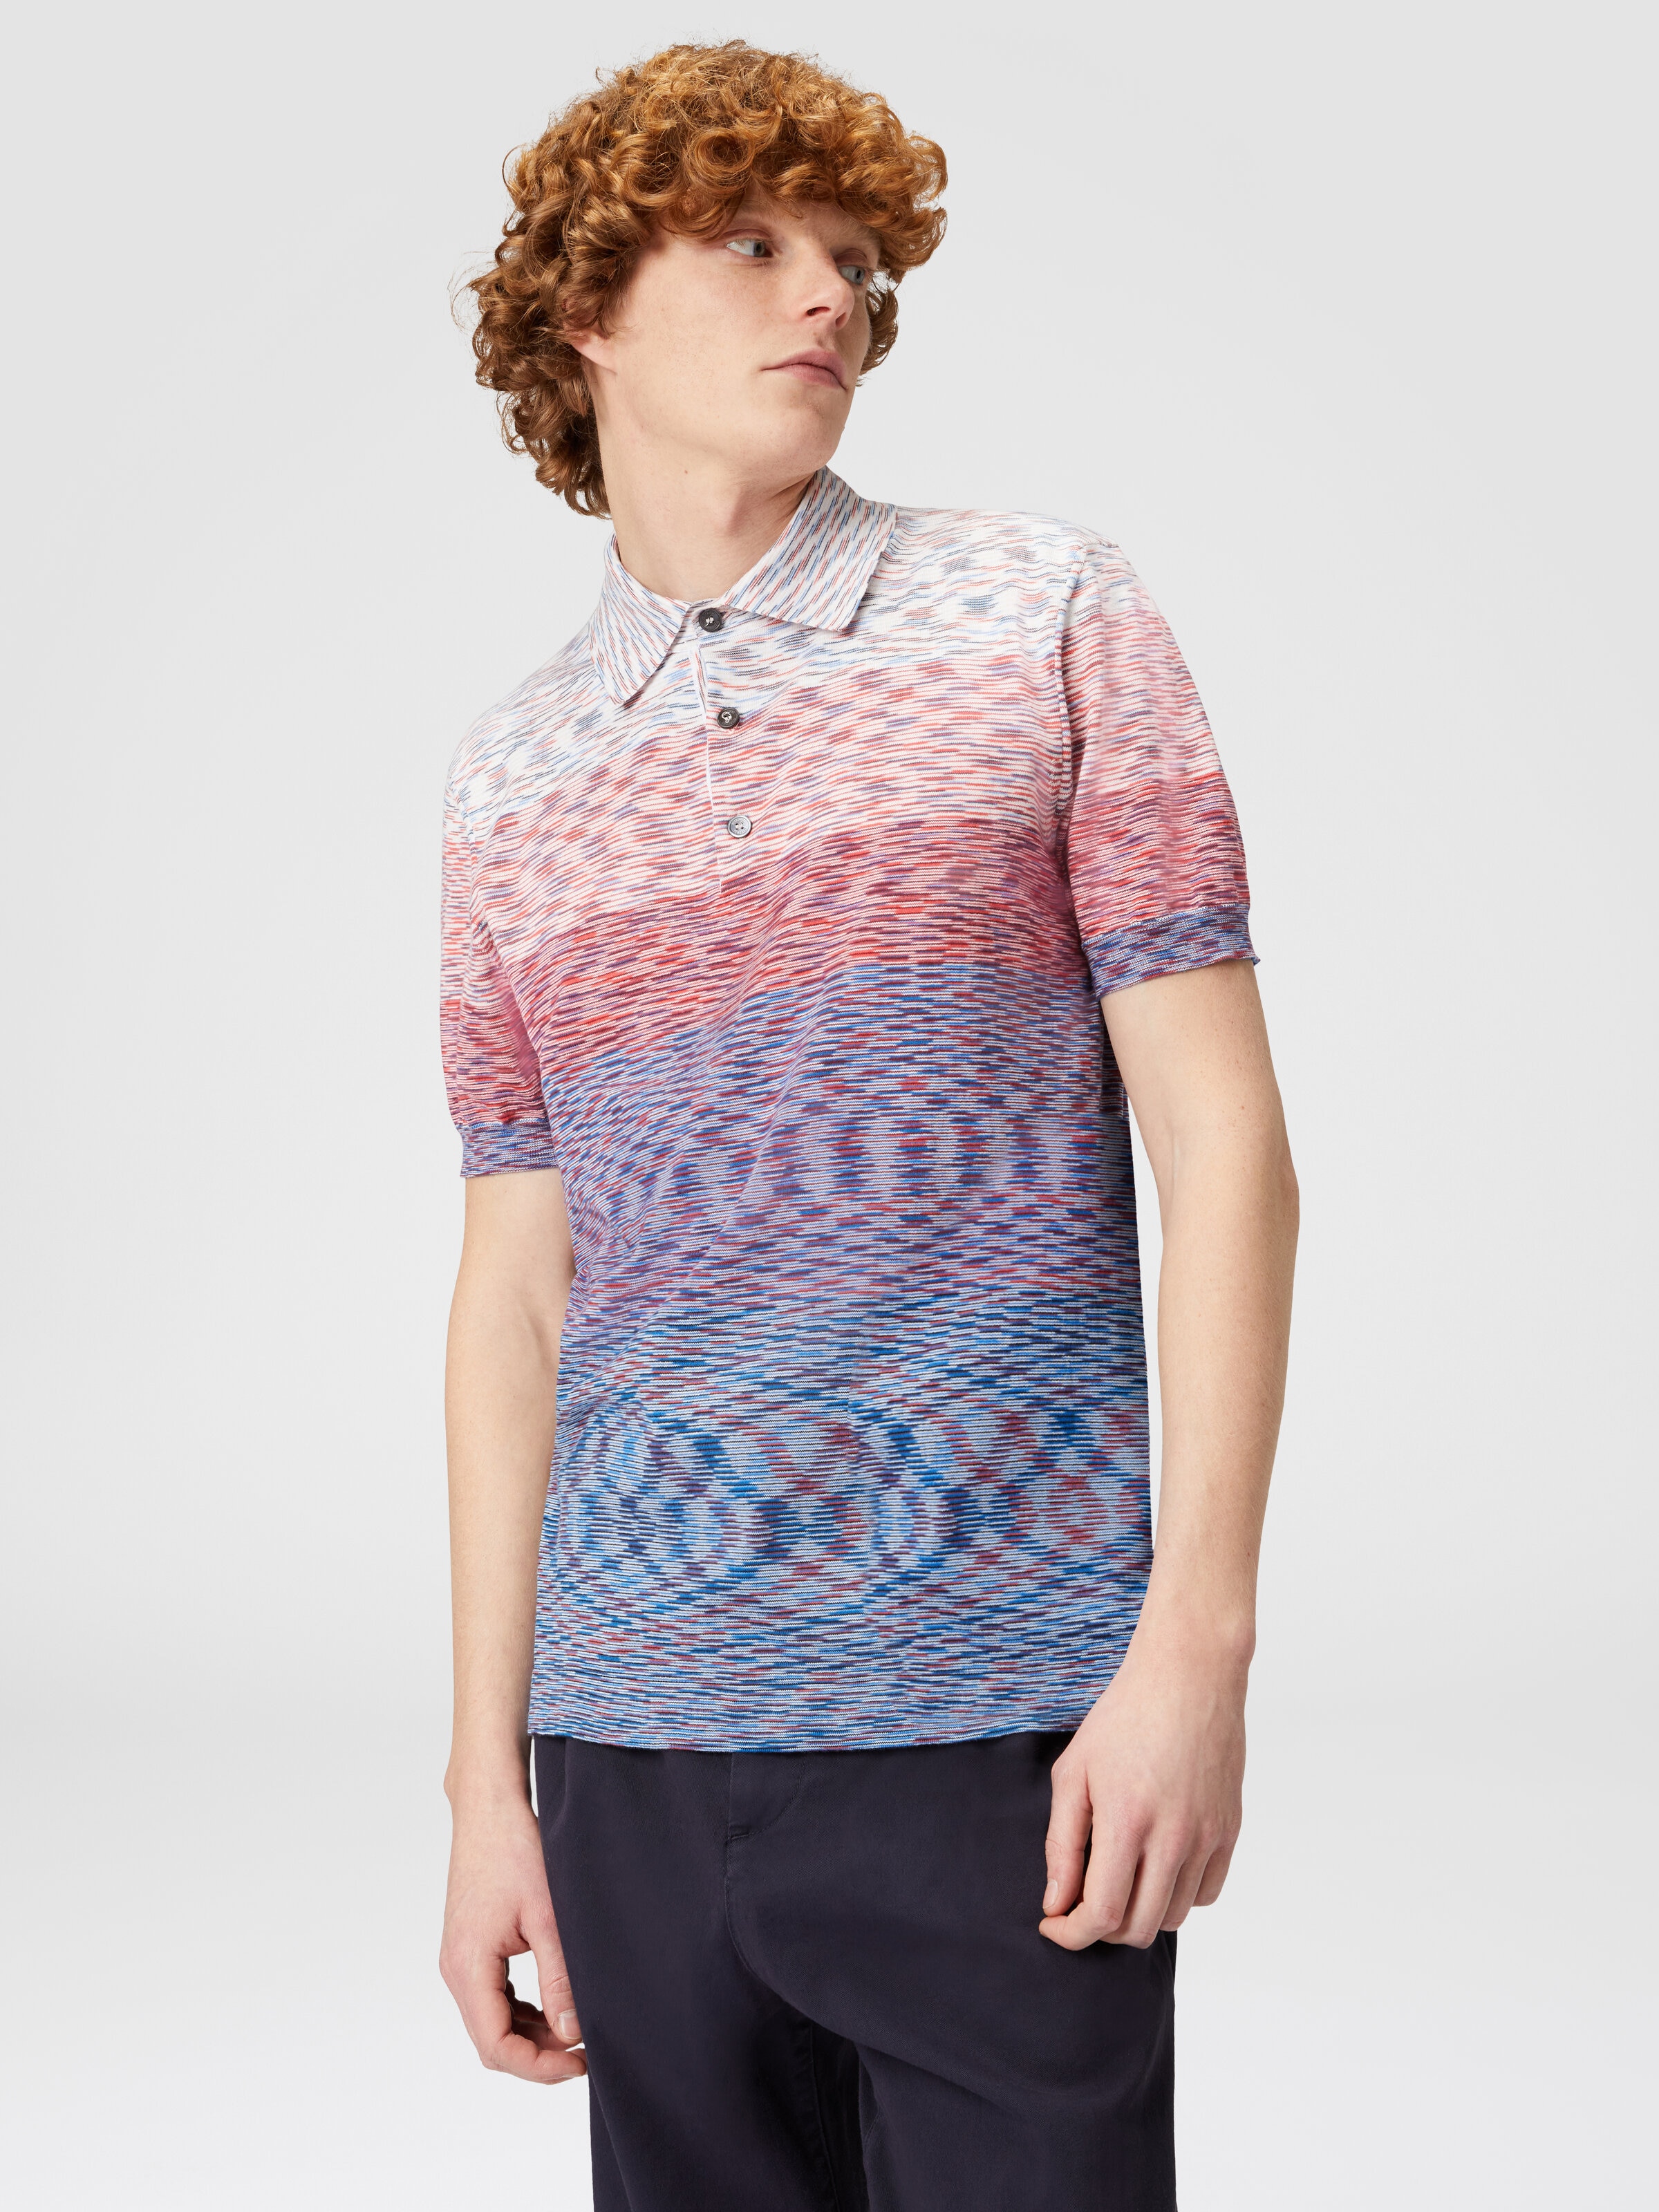 Kurzärmeliges Poloshirt aus Baumwolle in Flammgarnoptik mit Dégradé-Effekt, Mehrfarbig  - 3